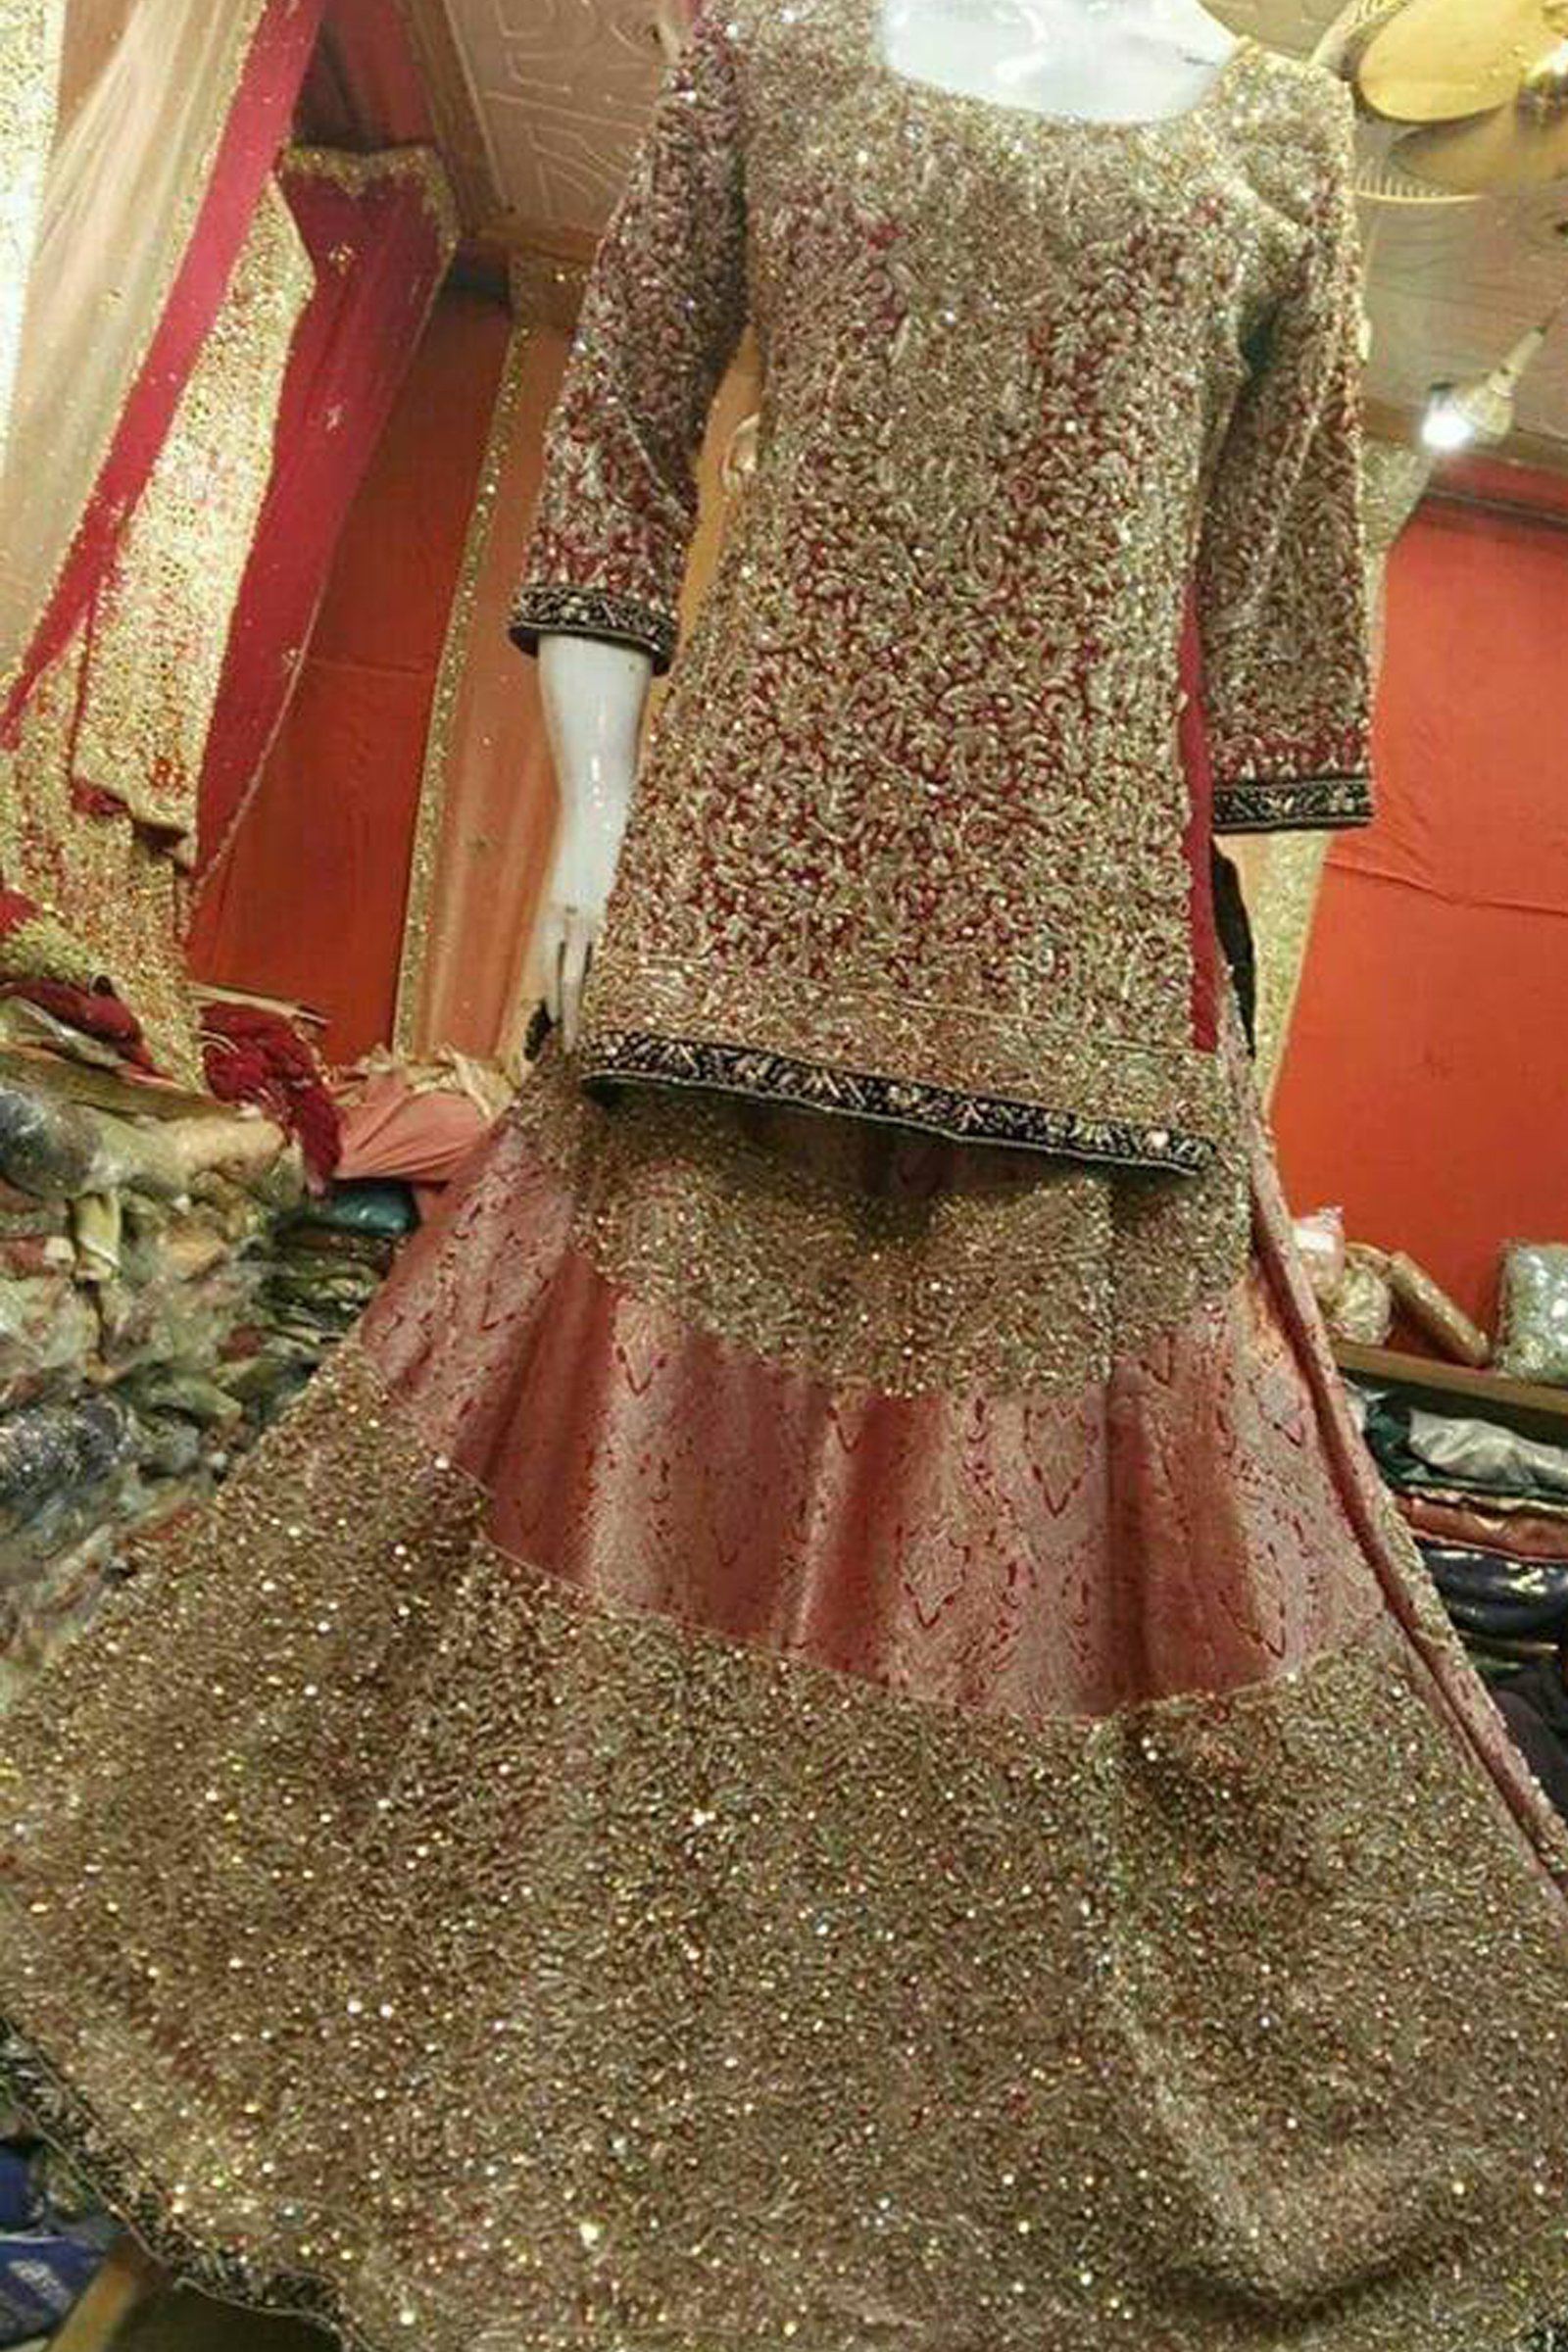 pakistani wedding dress online shopping